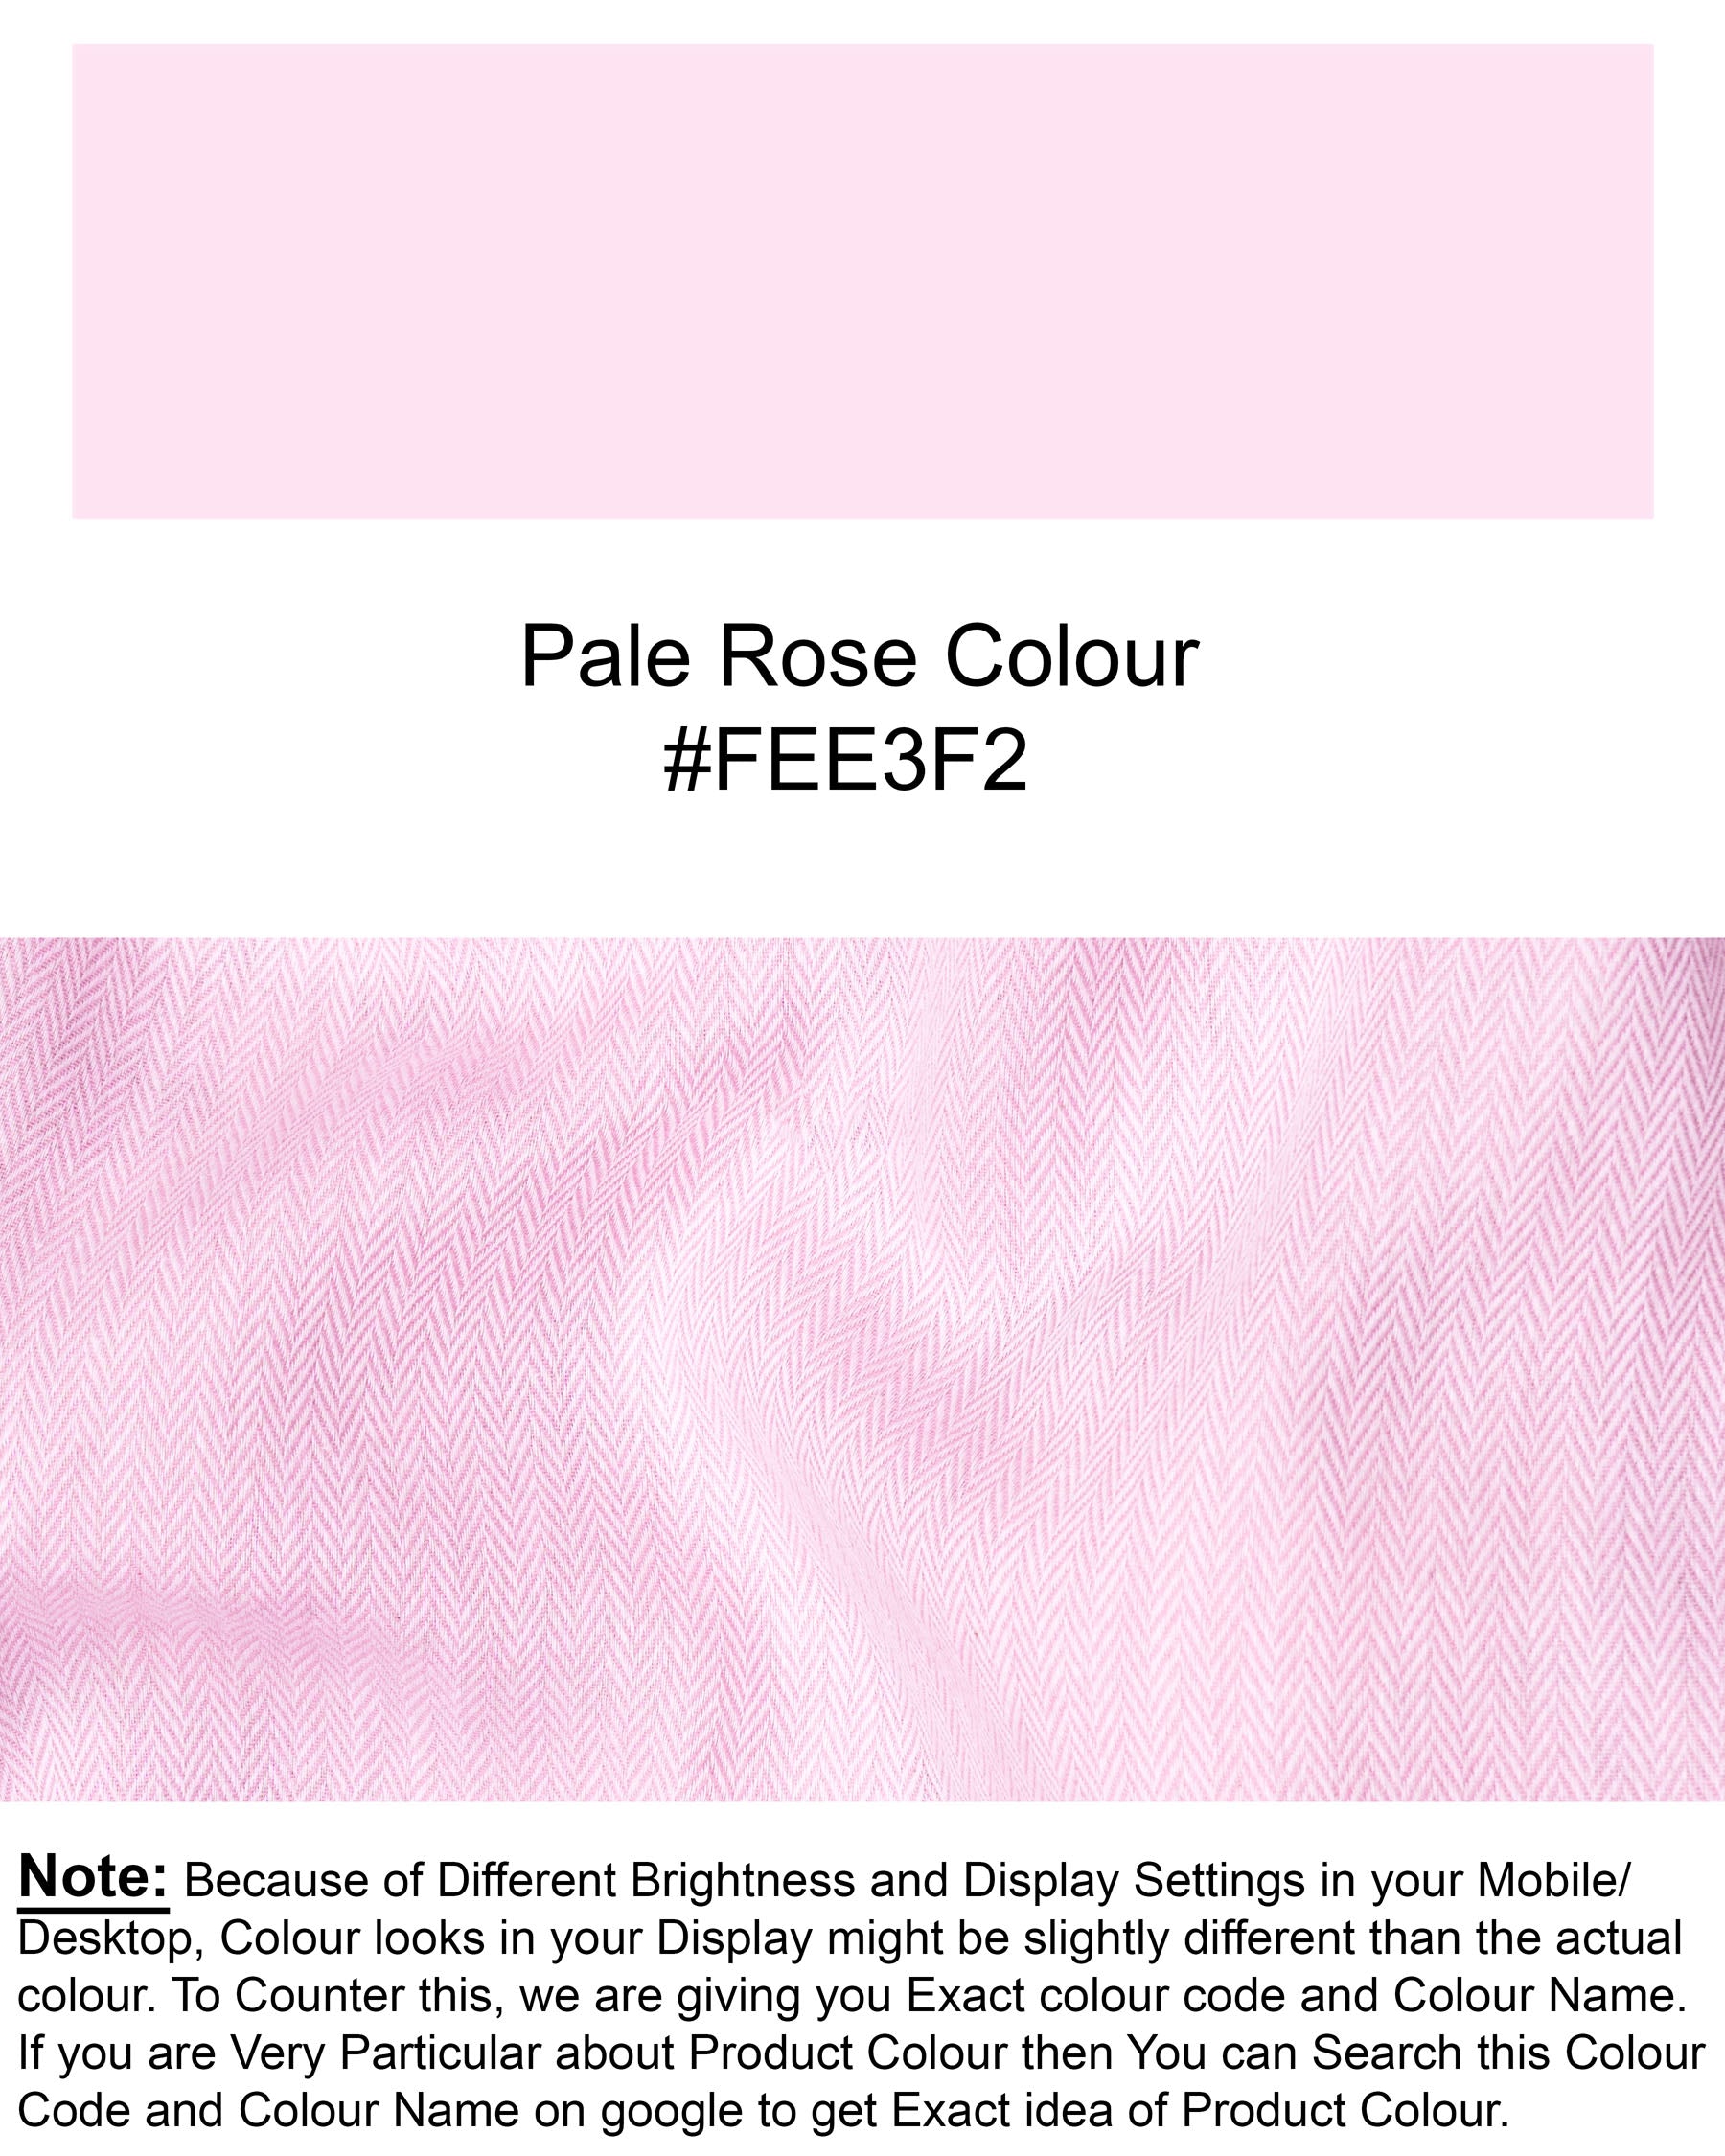 Pale Rose Pink Herringbone and Tencel rich Shirt 6594-CA-38,6594-CA-H-38,6594-CA-39,6594-CA-H-39,6594-CA-40,6594-CA-H-40,6594-CA-42,6594-CA-H-42,6594-CA-44,6594-CA-H-44,6594-CA-46,6594-CA-H-46,6594-CA-48,6594-CA-H-48,6594-CA-50,6594-CA-H-50,6594-CA-52,6594-CA-H-52